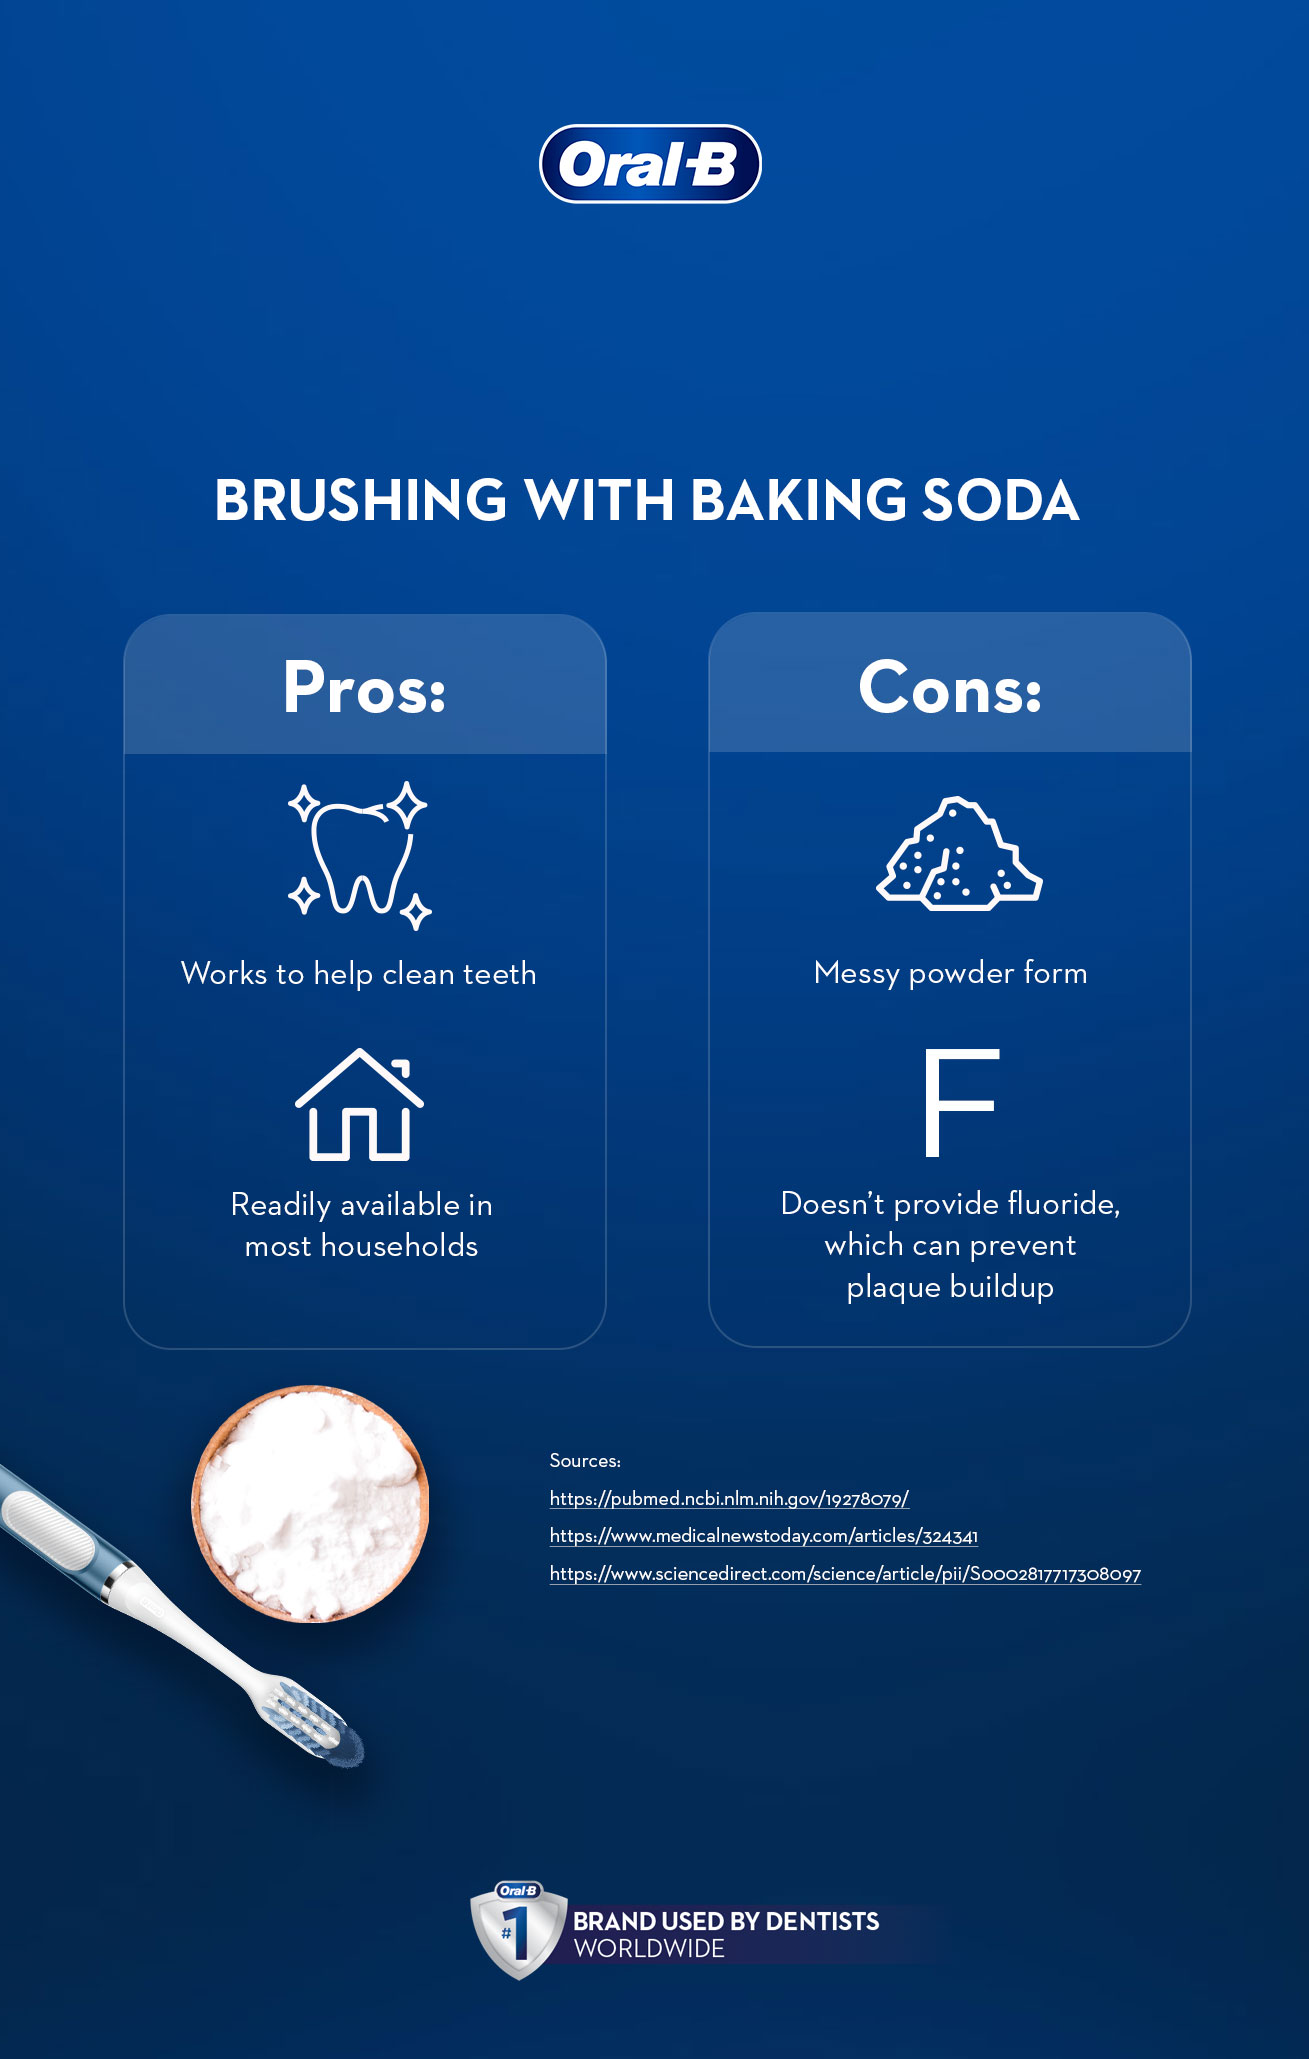 Effects of Brushing With Baking Soda